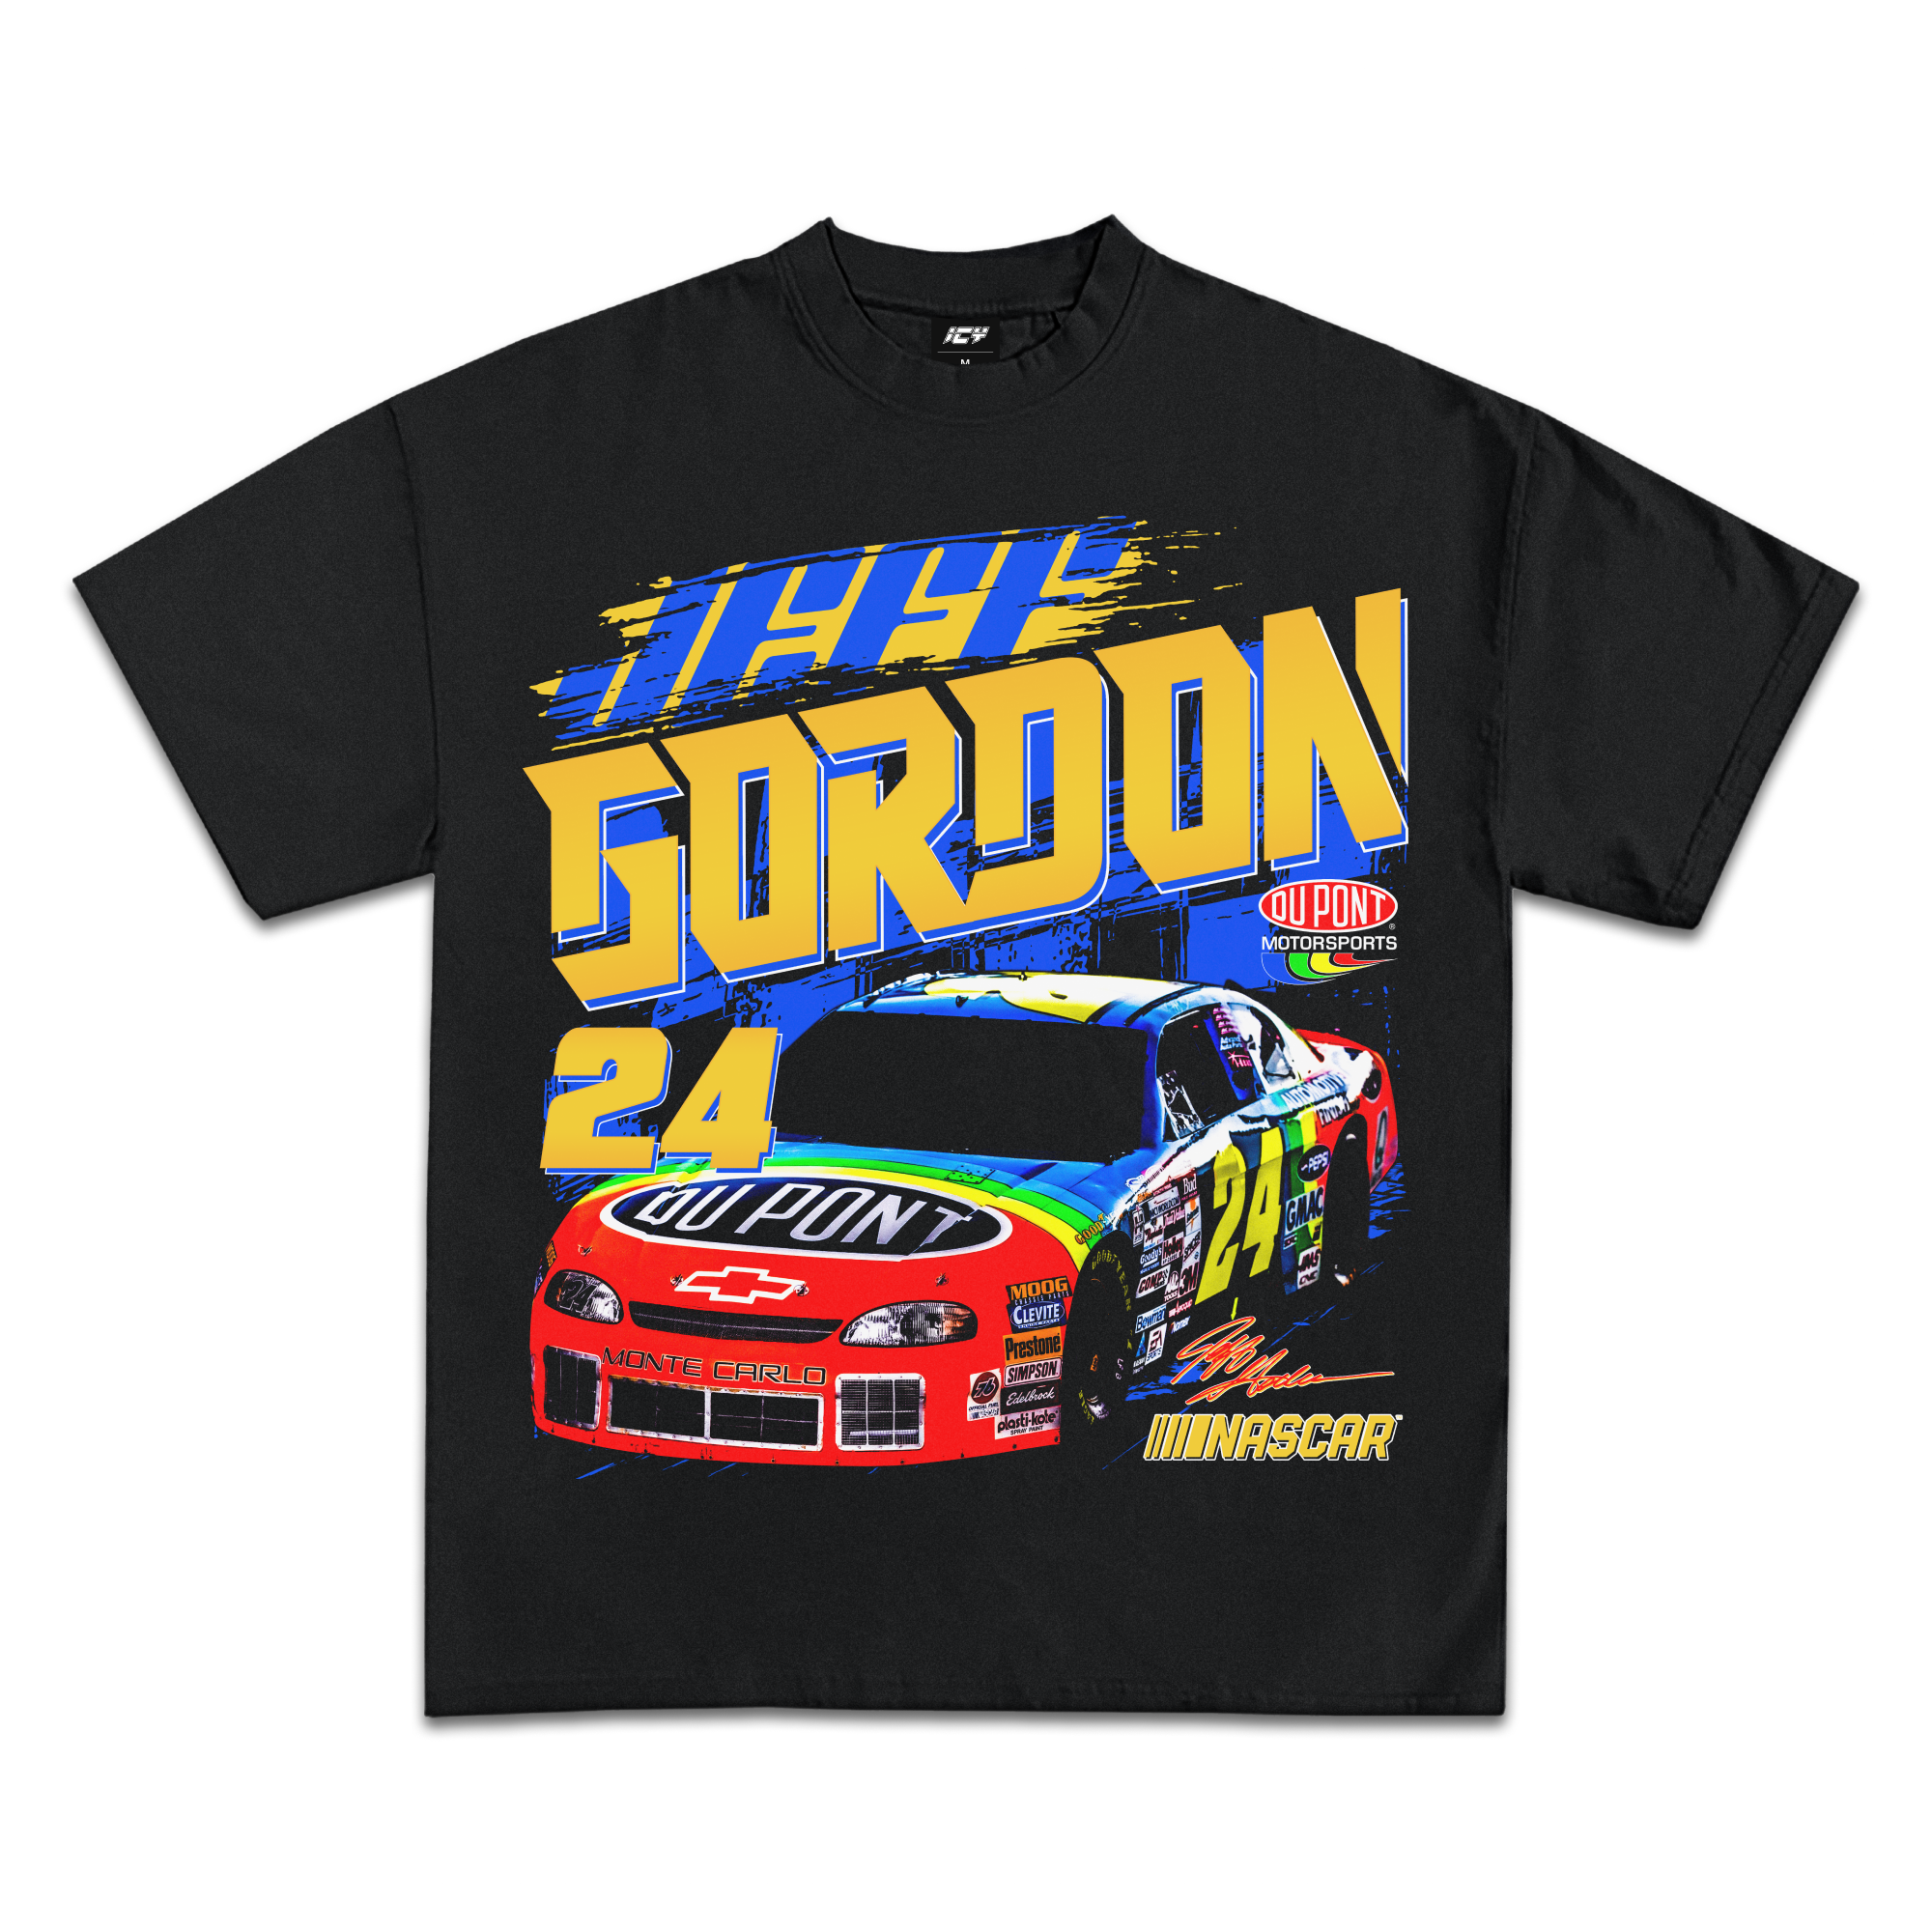 Jeff Gordon NASCAR Racing T-Shirt